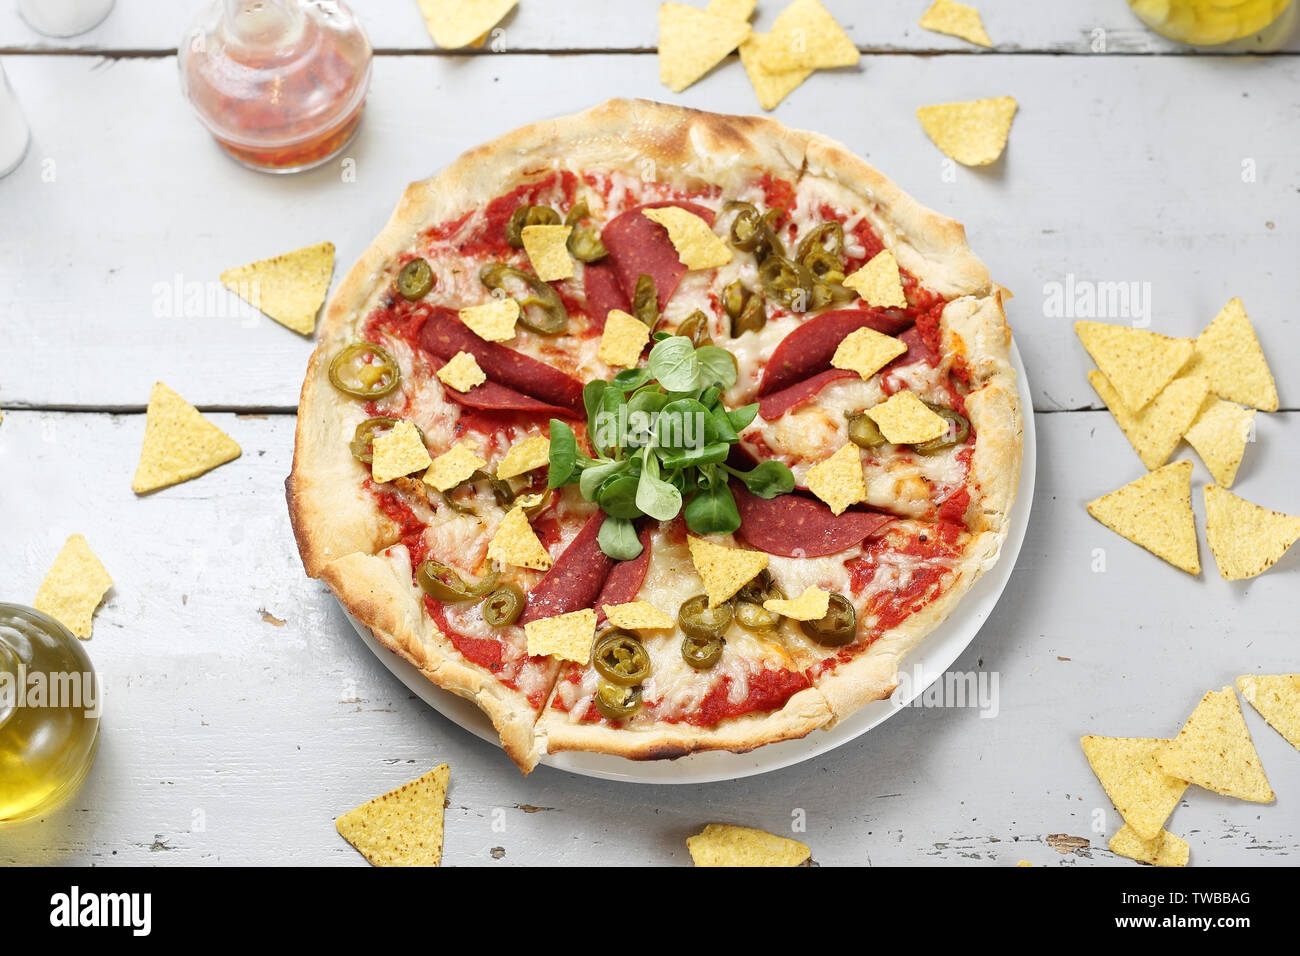 Pizza vegetariana con salami di soia. Una sana dieta senza carne. Foto Stock